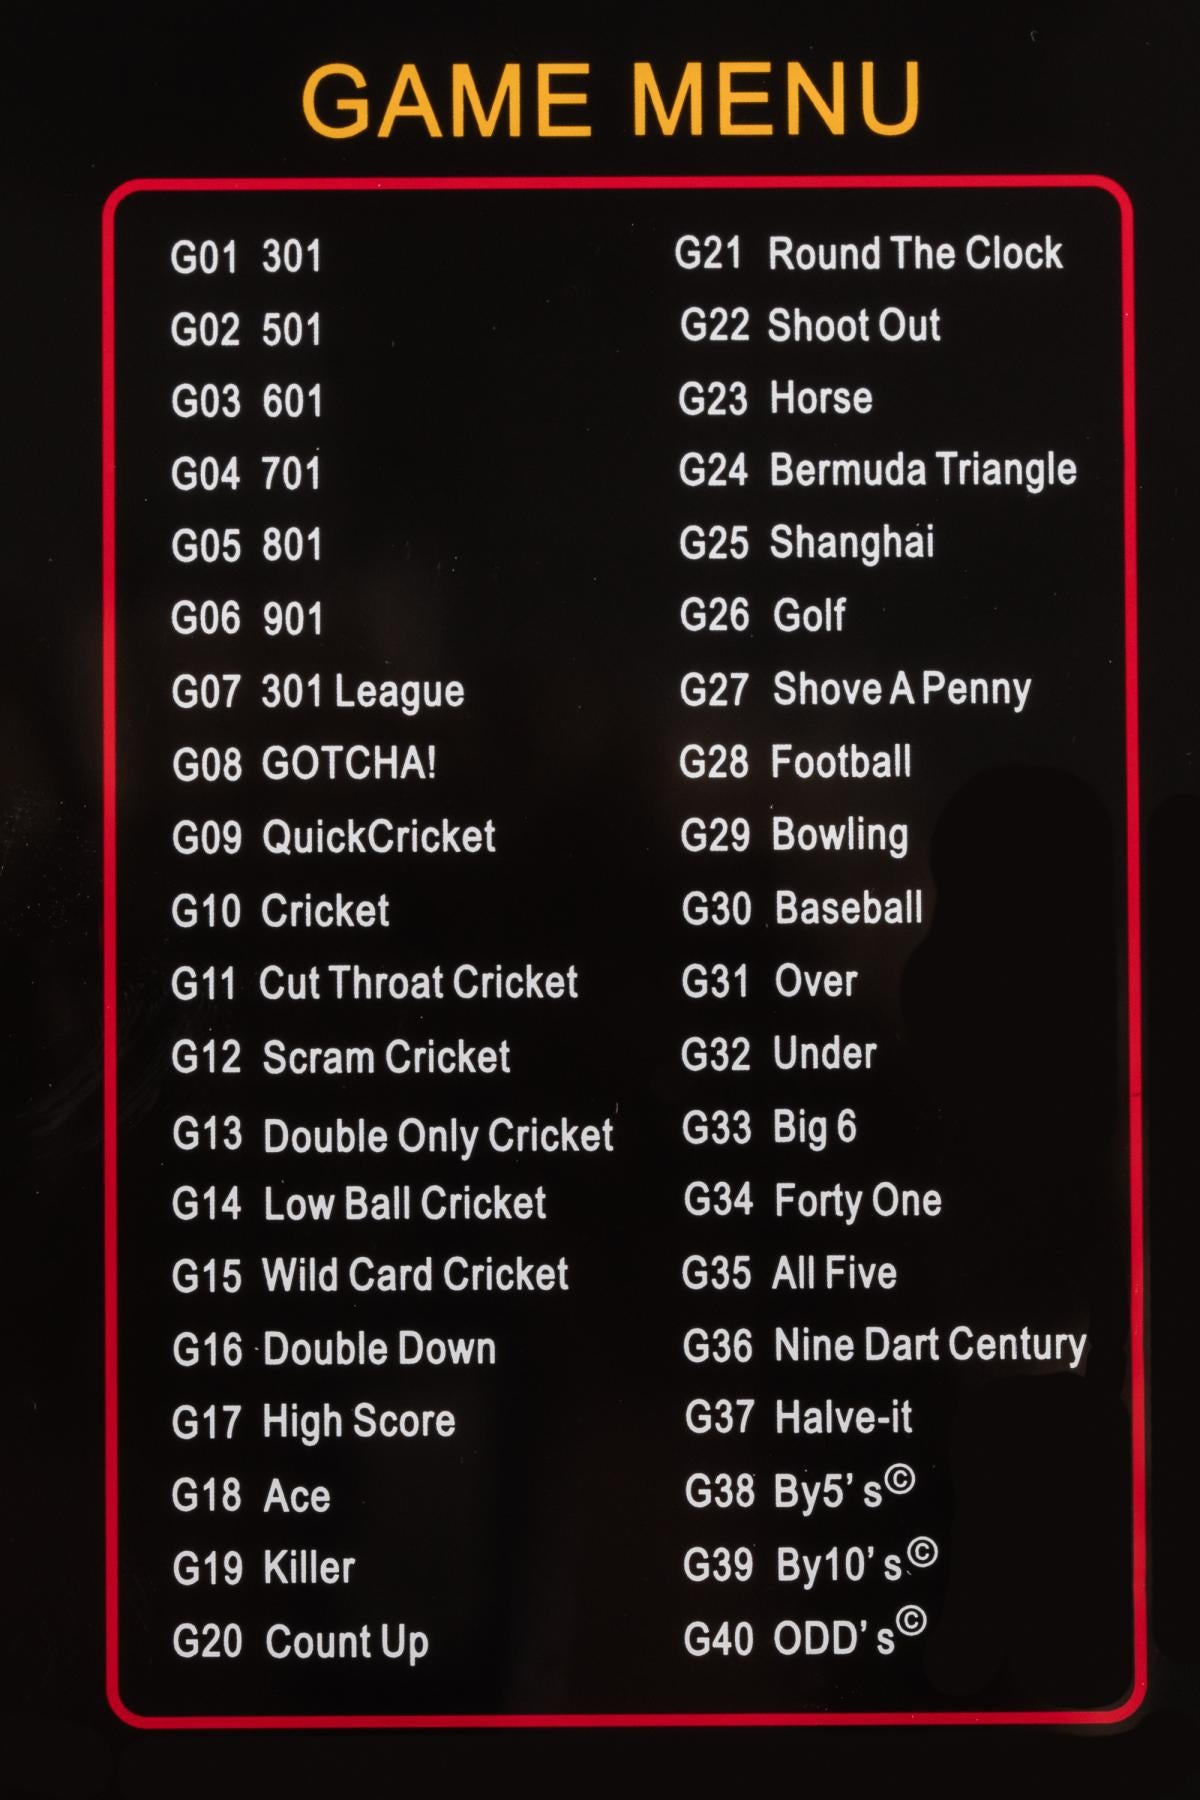 Arachnid Cricket Pro 800 Standing Electronic Dartboard